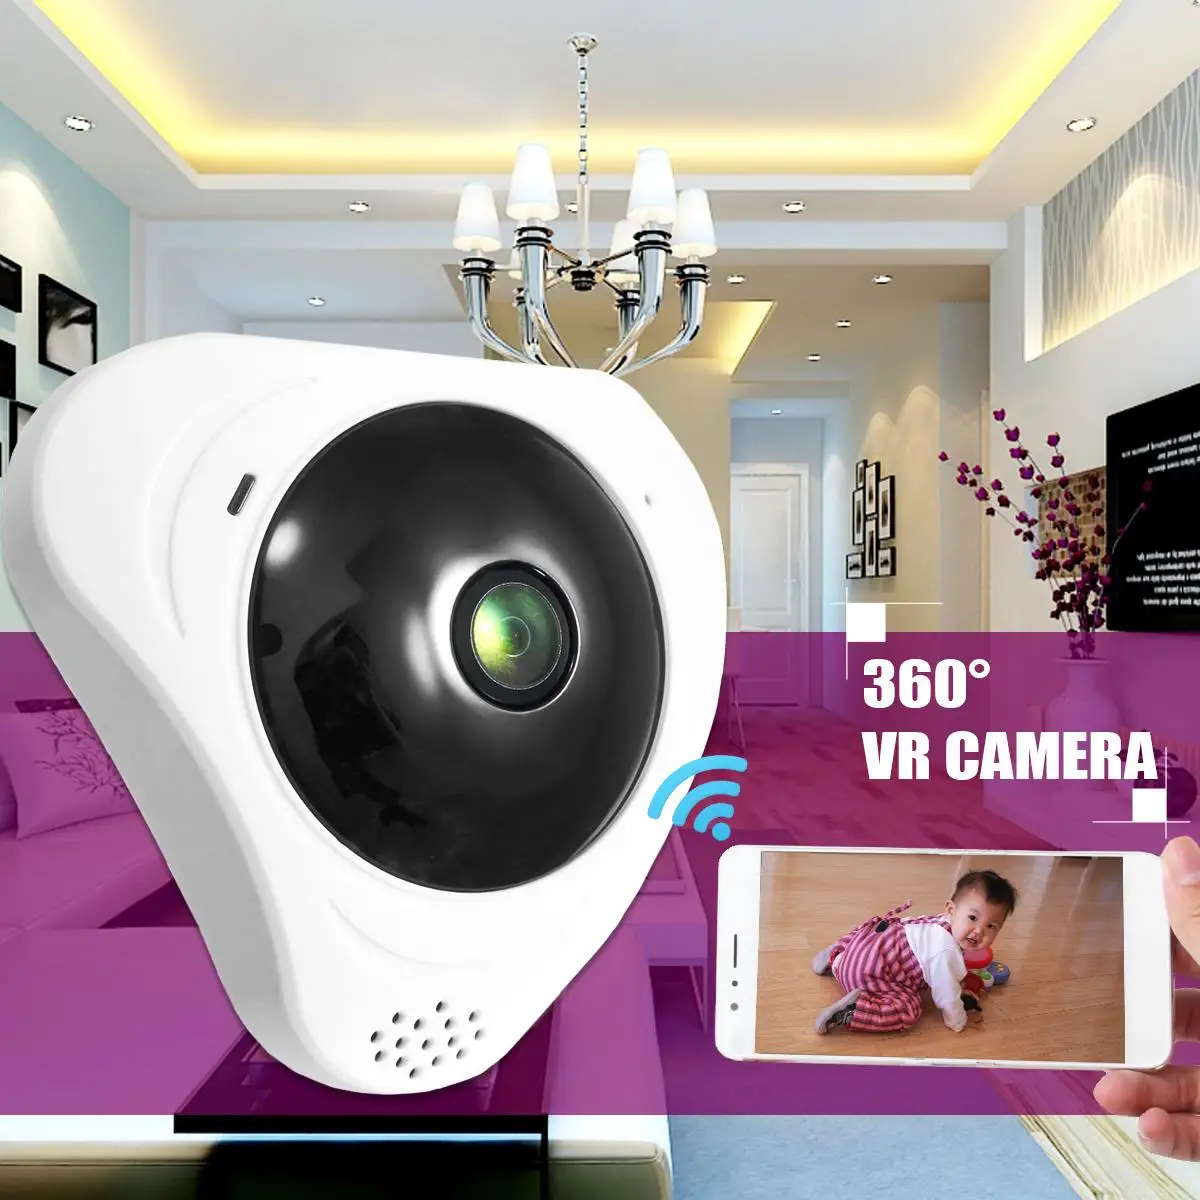 

3D VR WIFI Camera 360 Degree Panoramic FIsheye 960P WIreless Indoor Security White EU Plug